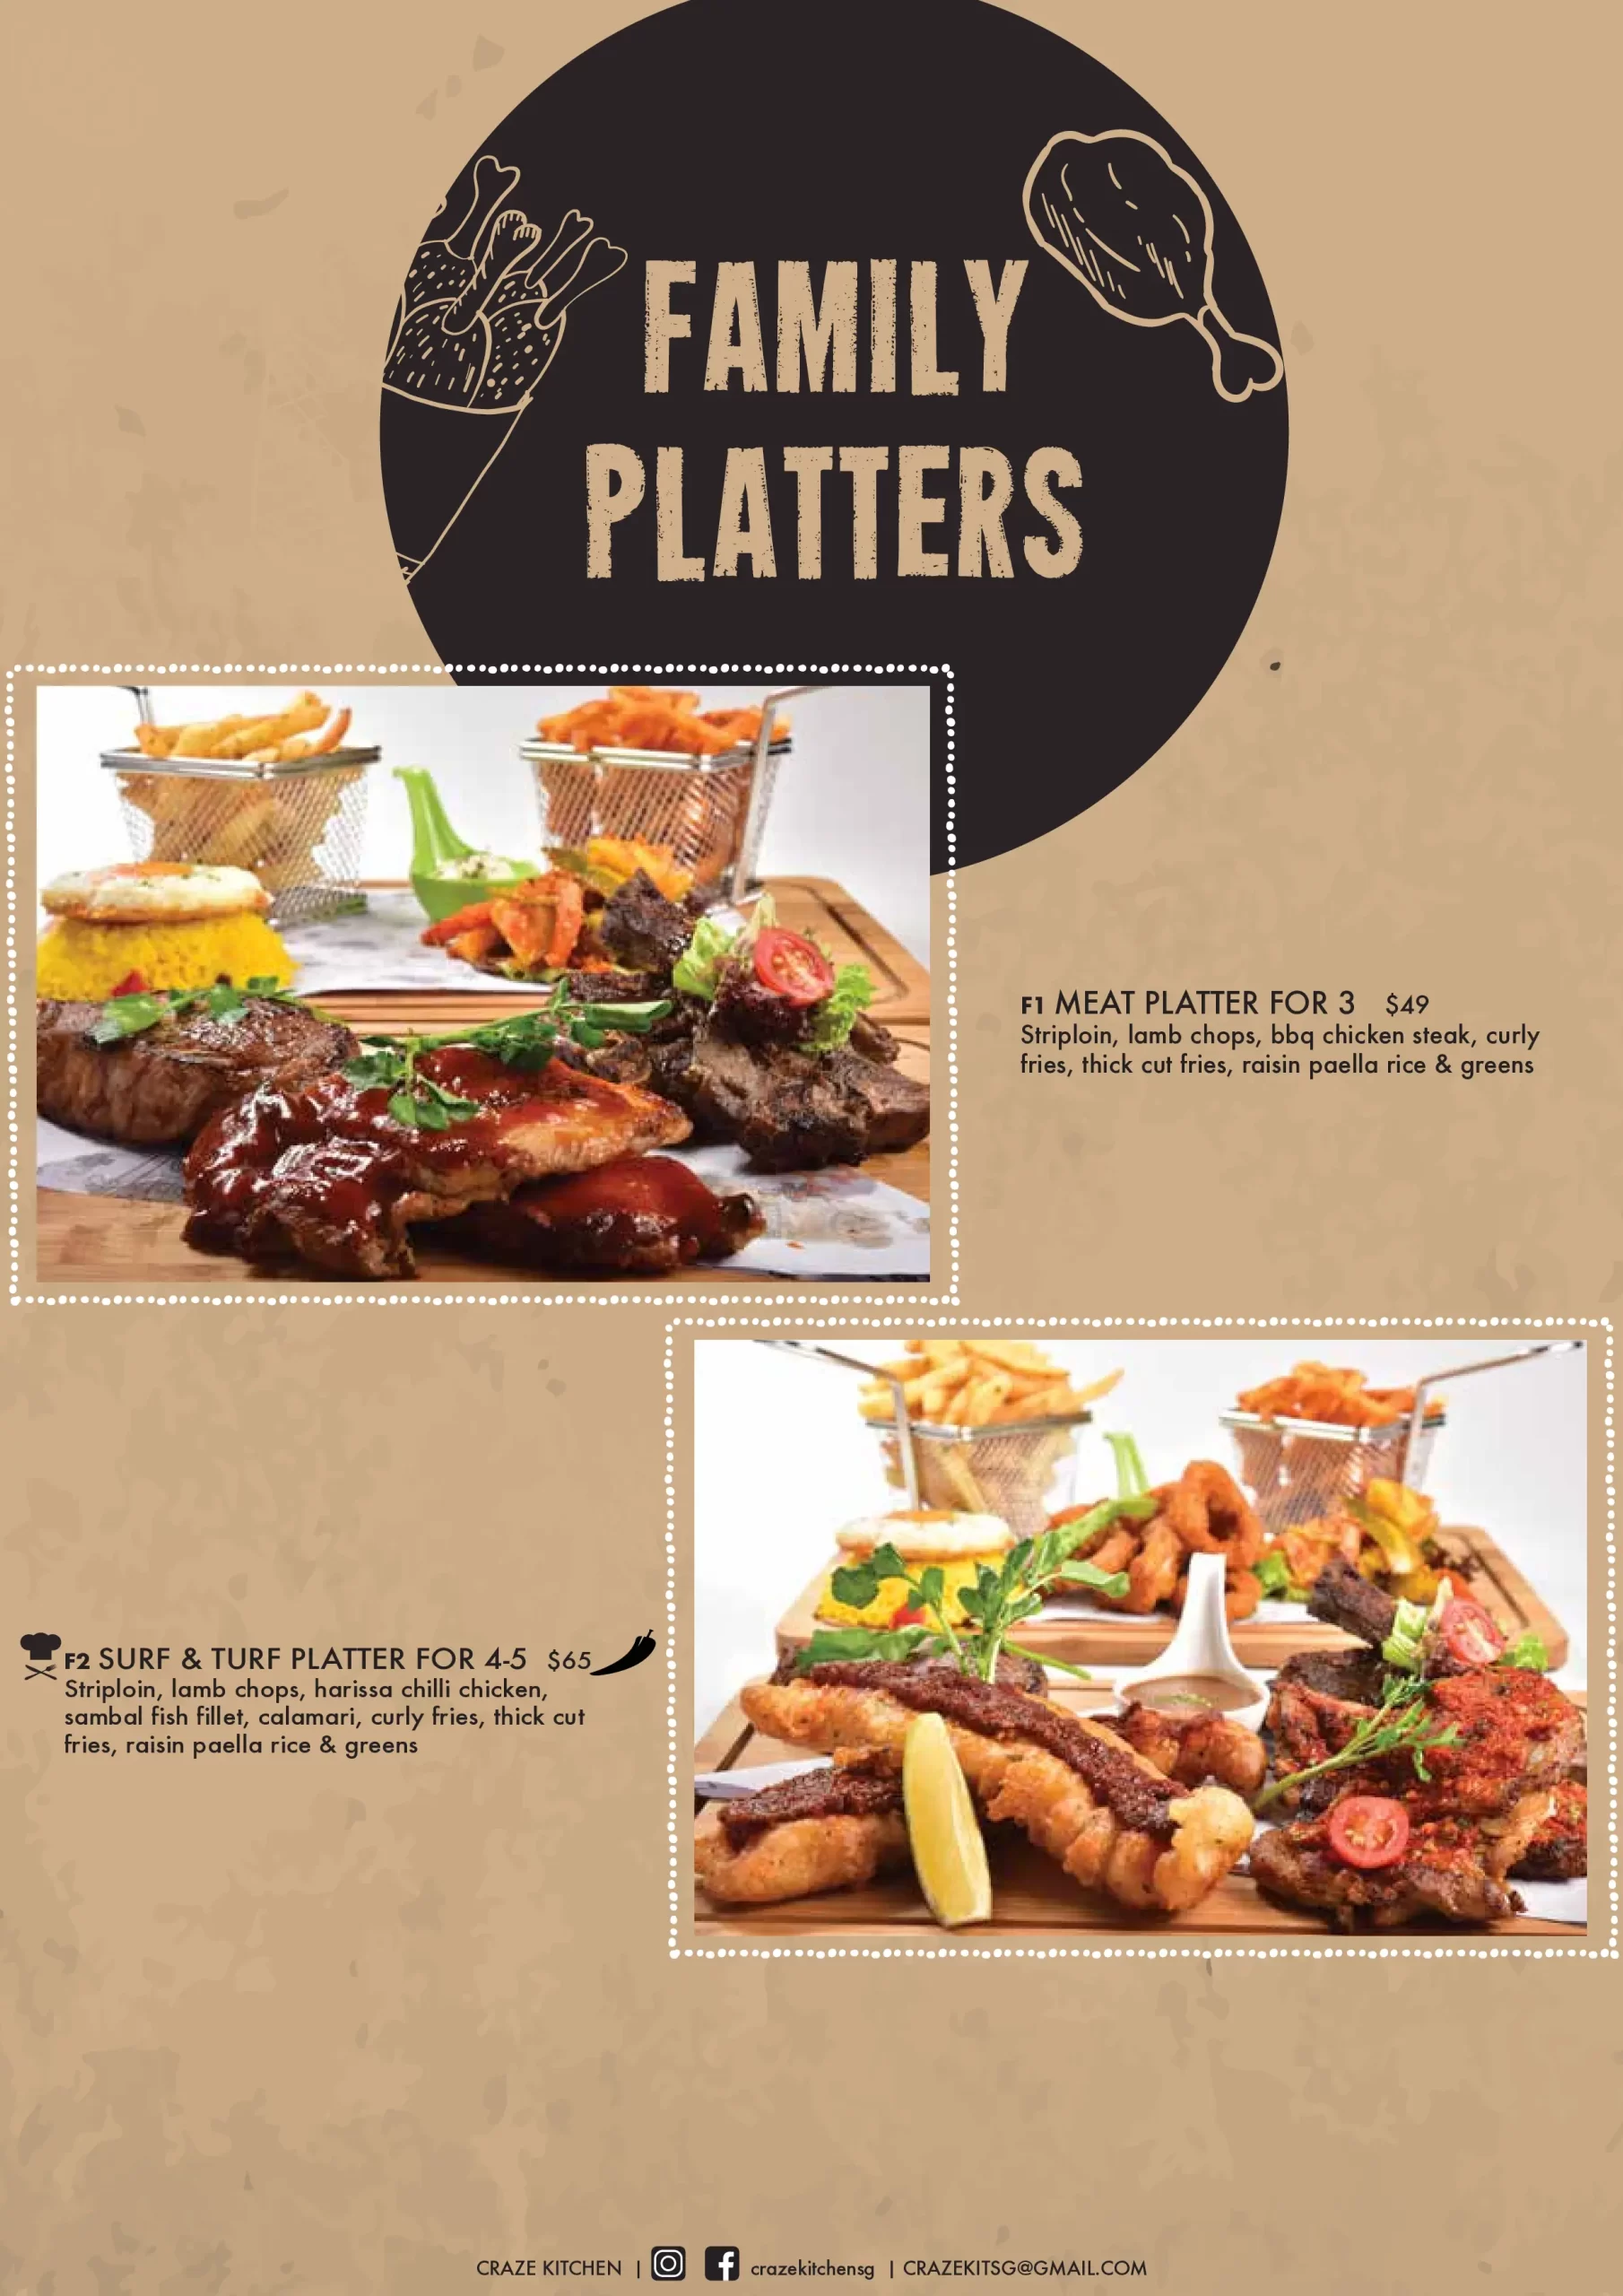 Craze Kitchen Singapore family platters, Menu & Price List 